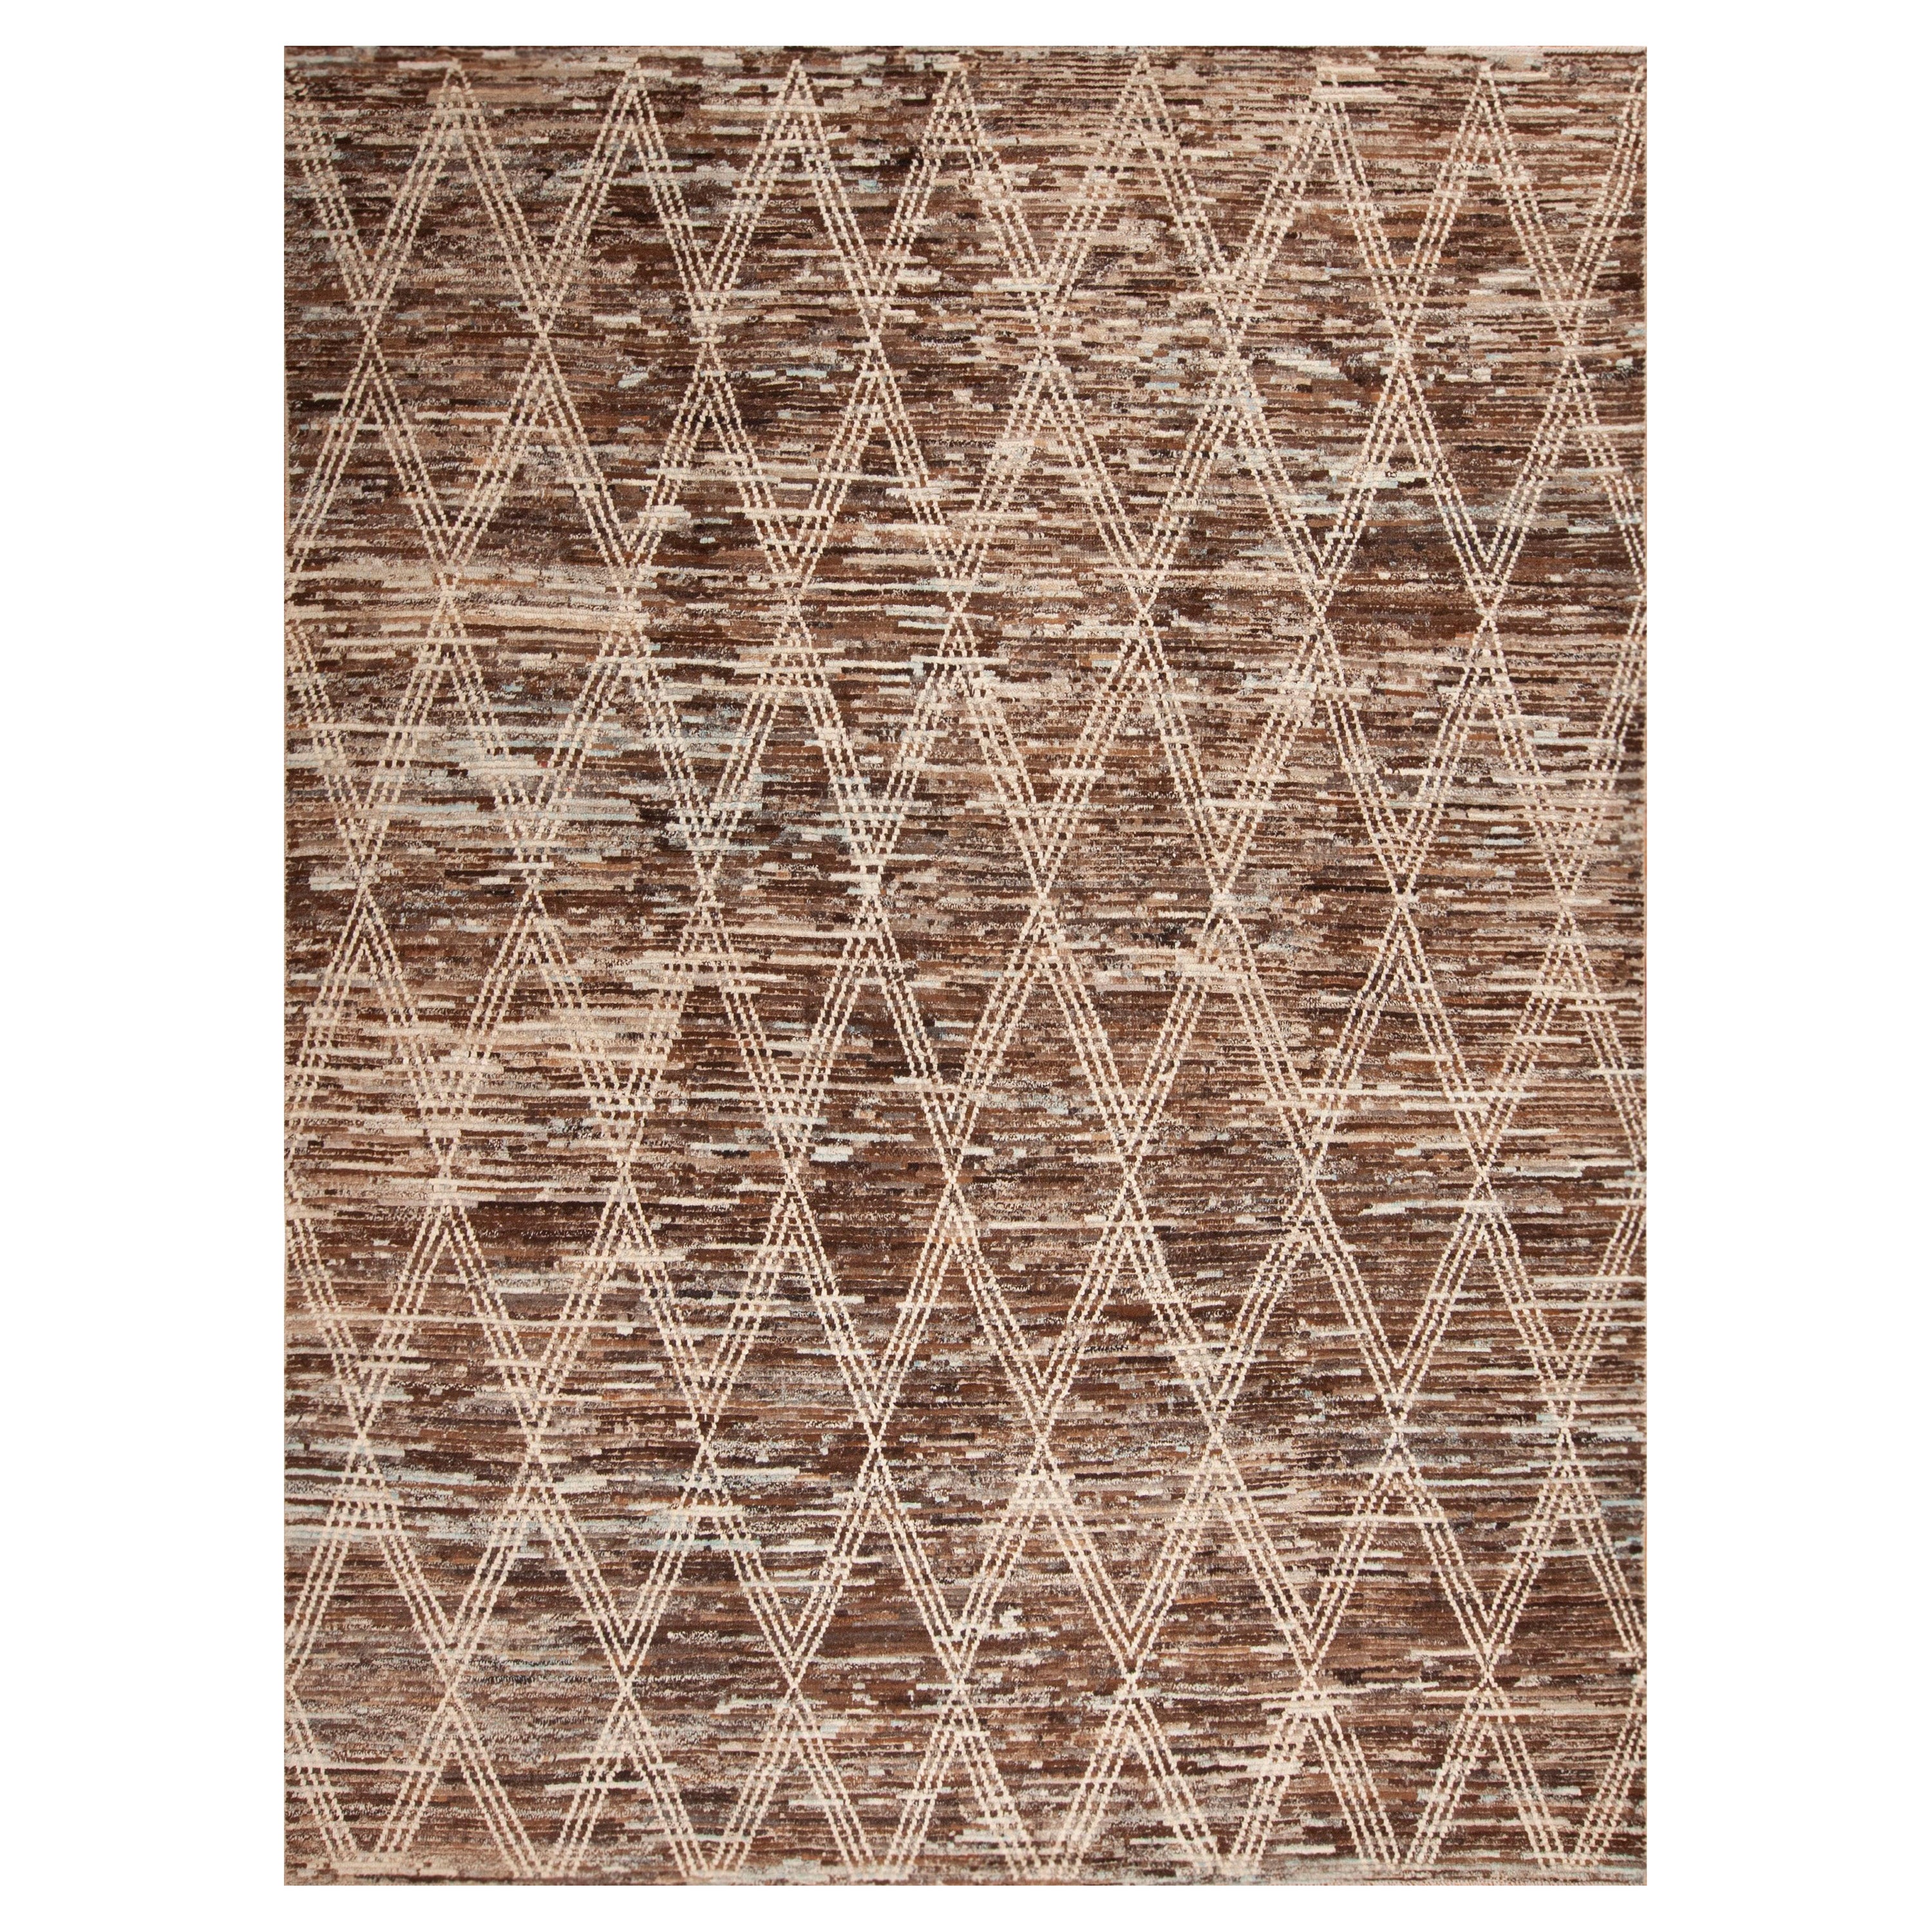 Nazmiyal Collection Earthy Brown Tribal Geometric Modern Rug 10' x 13'5" For Sale